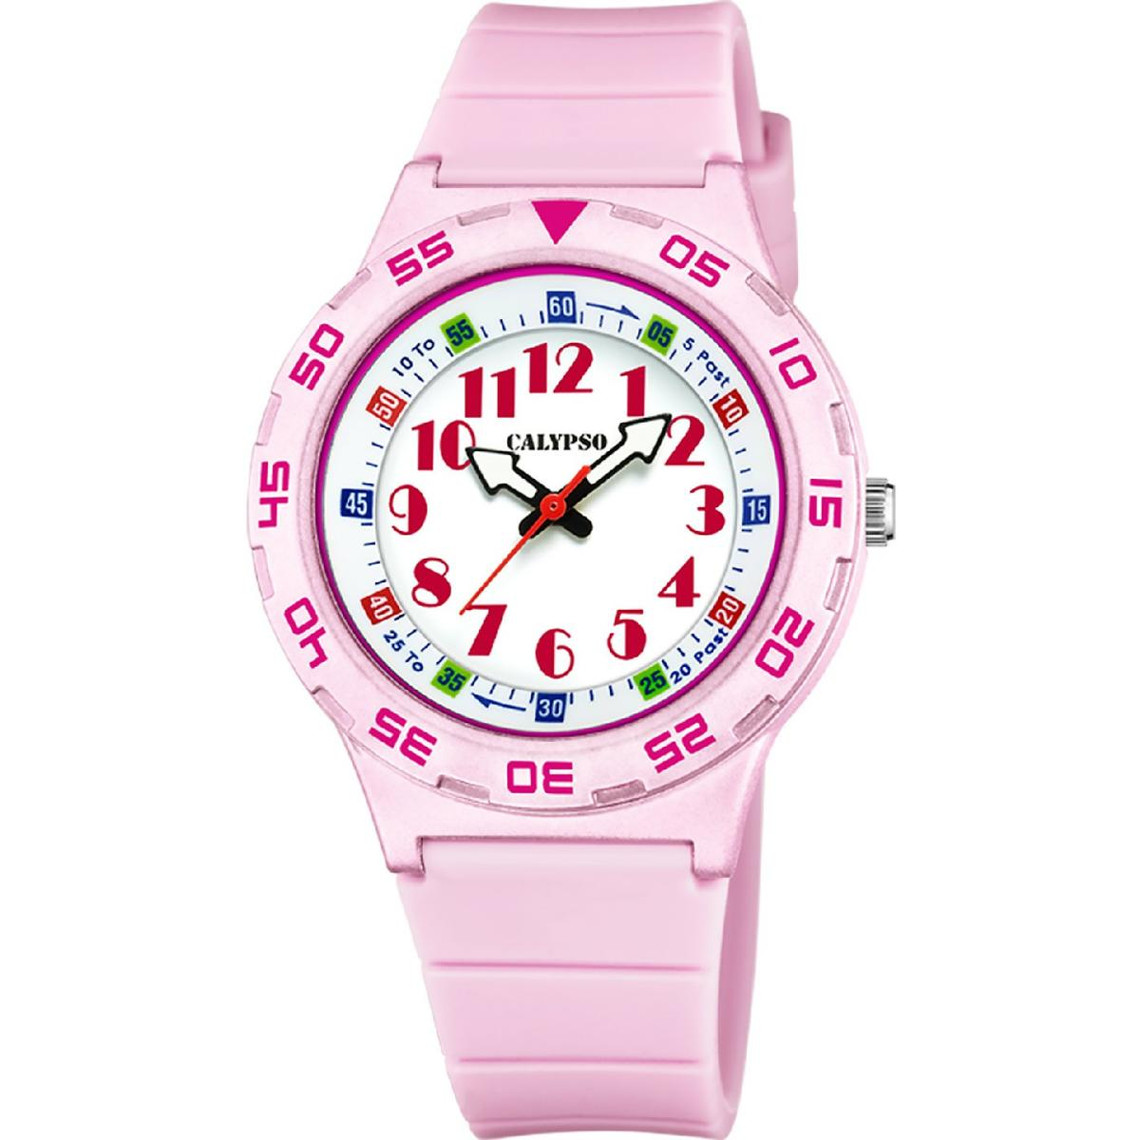 Montre fille K5828-1 - My First Watch